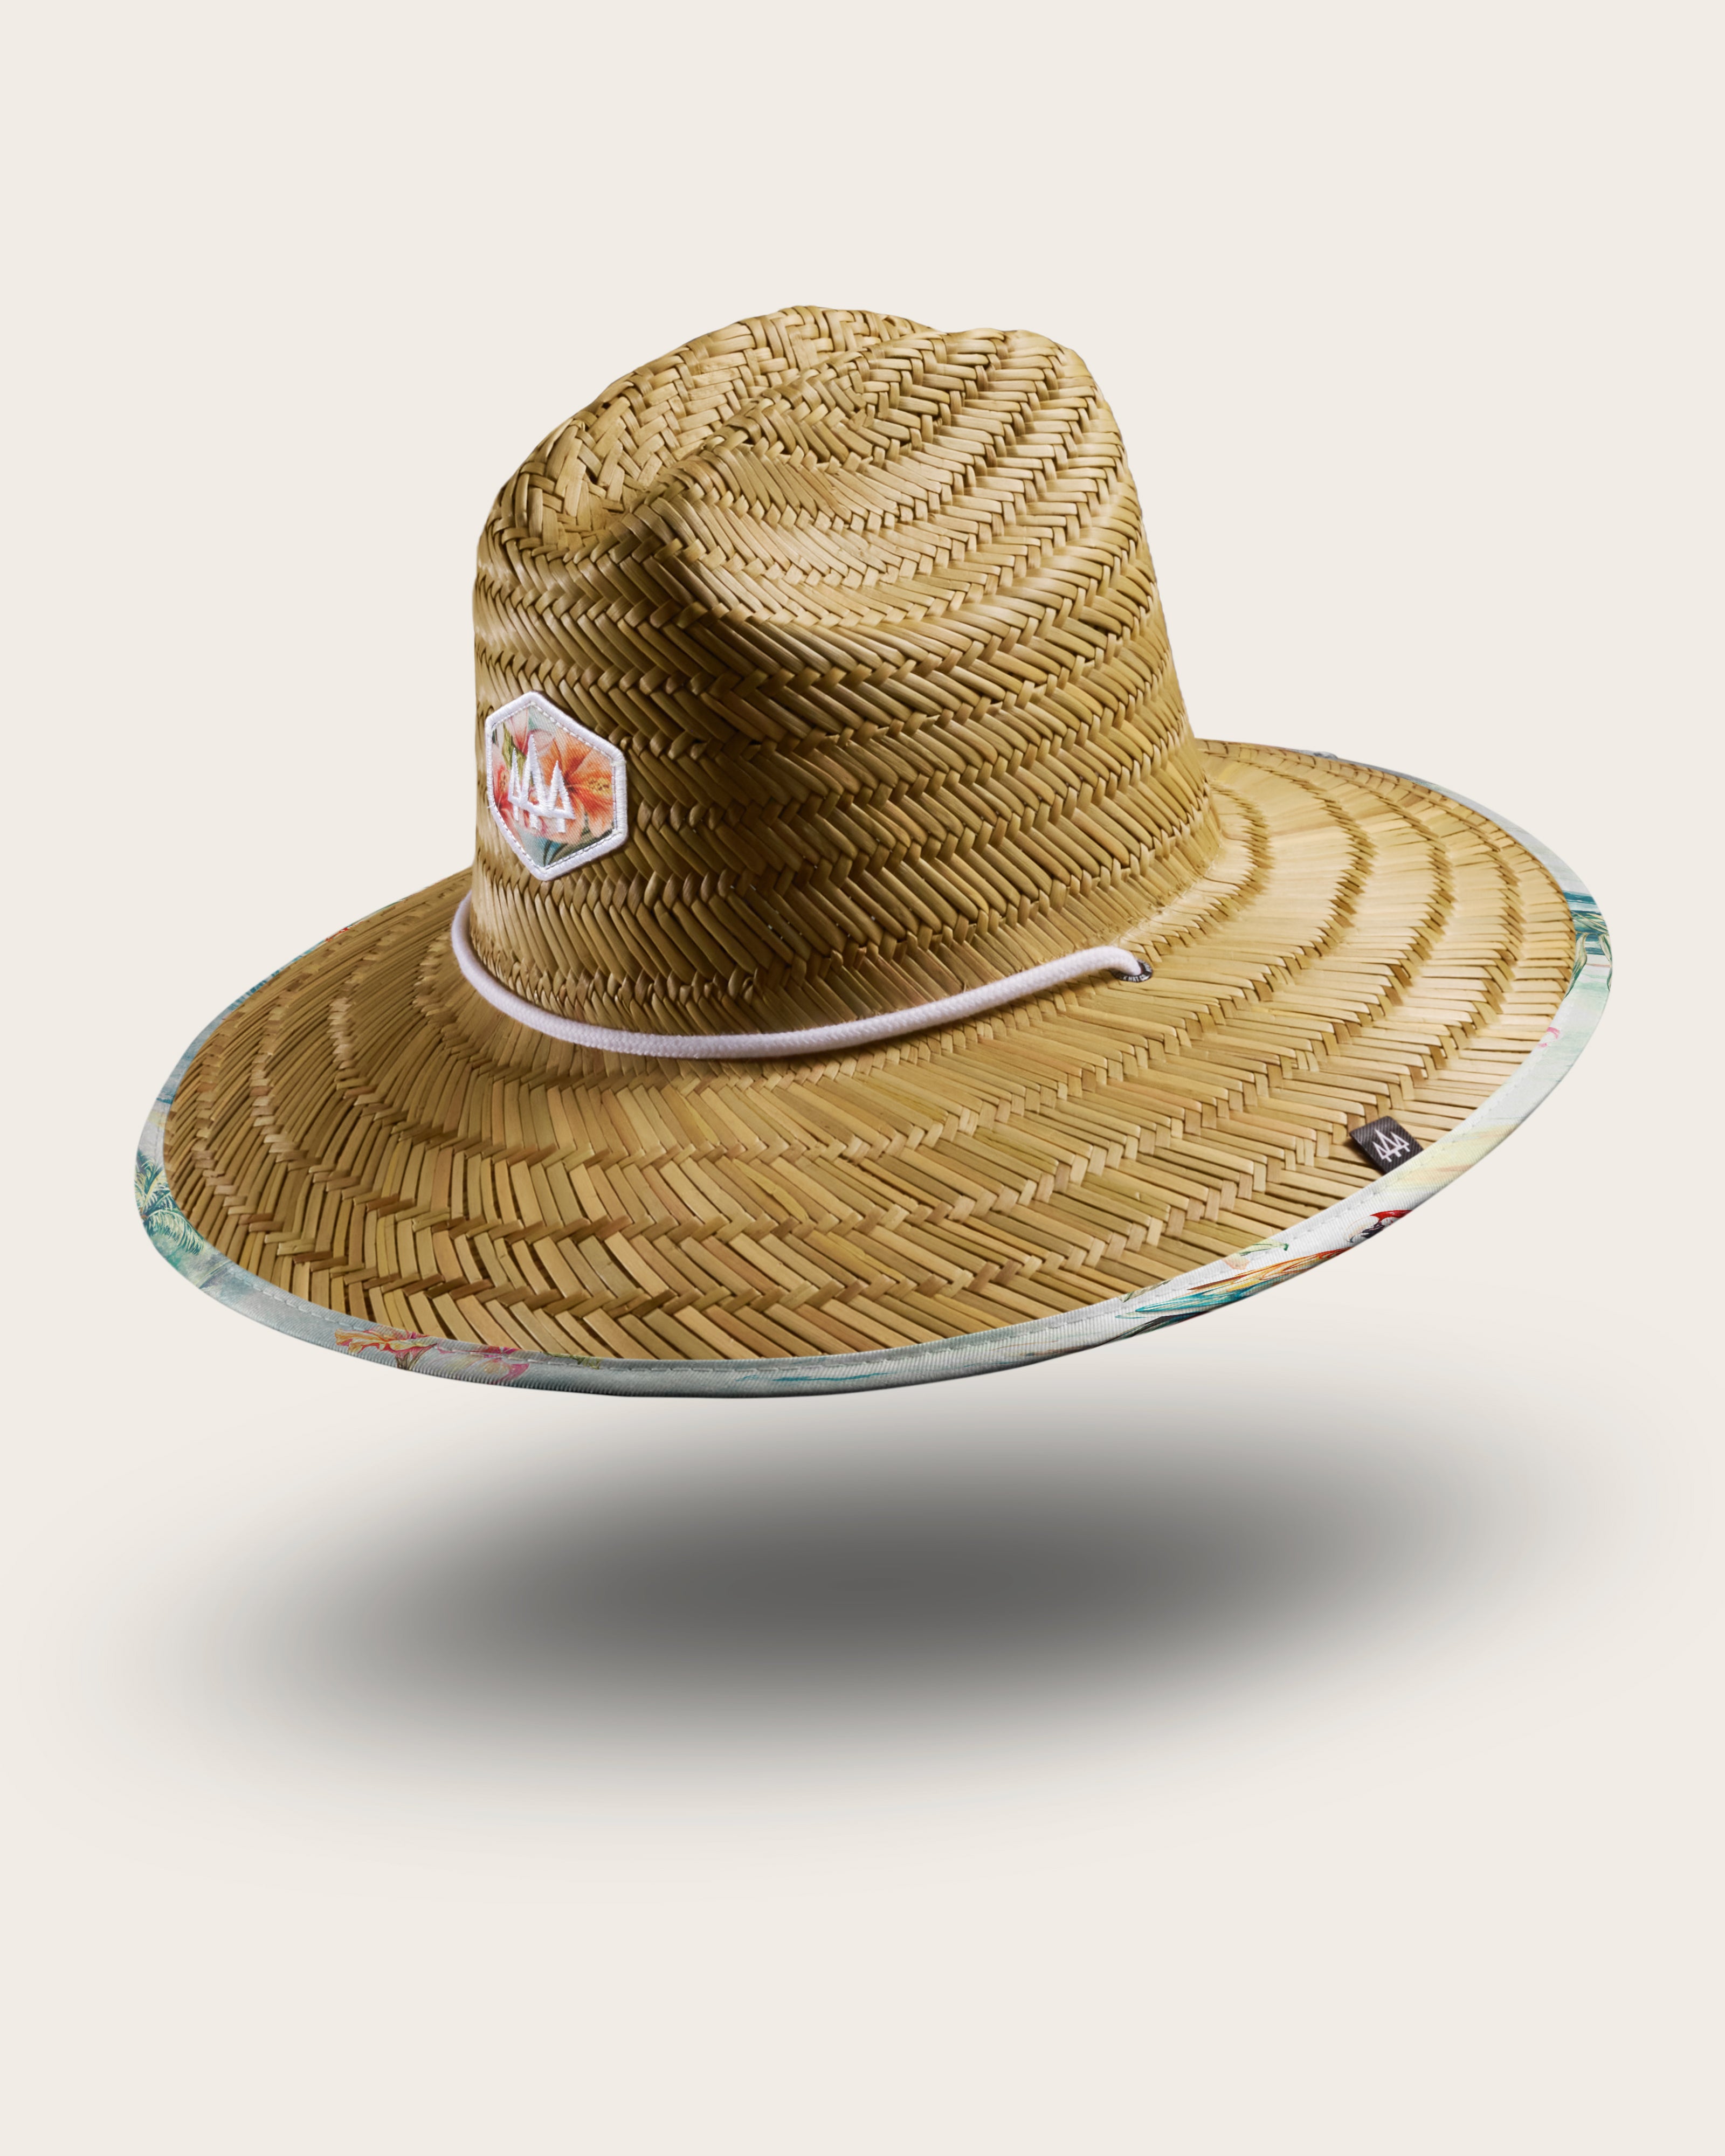 Hemlock Hanalei straw lifeguard hat with hula pattern with patch